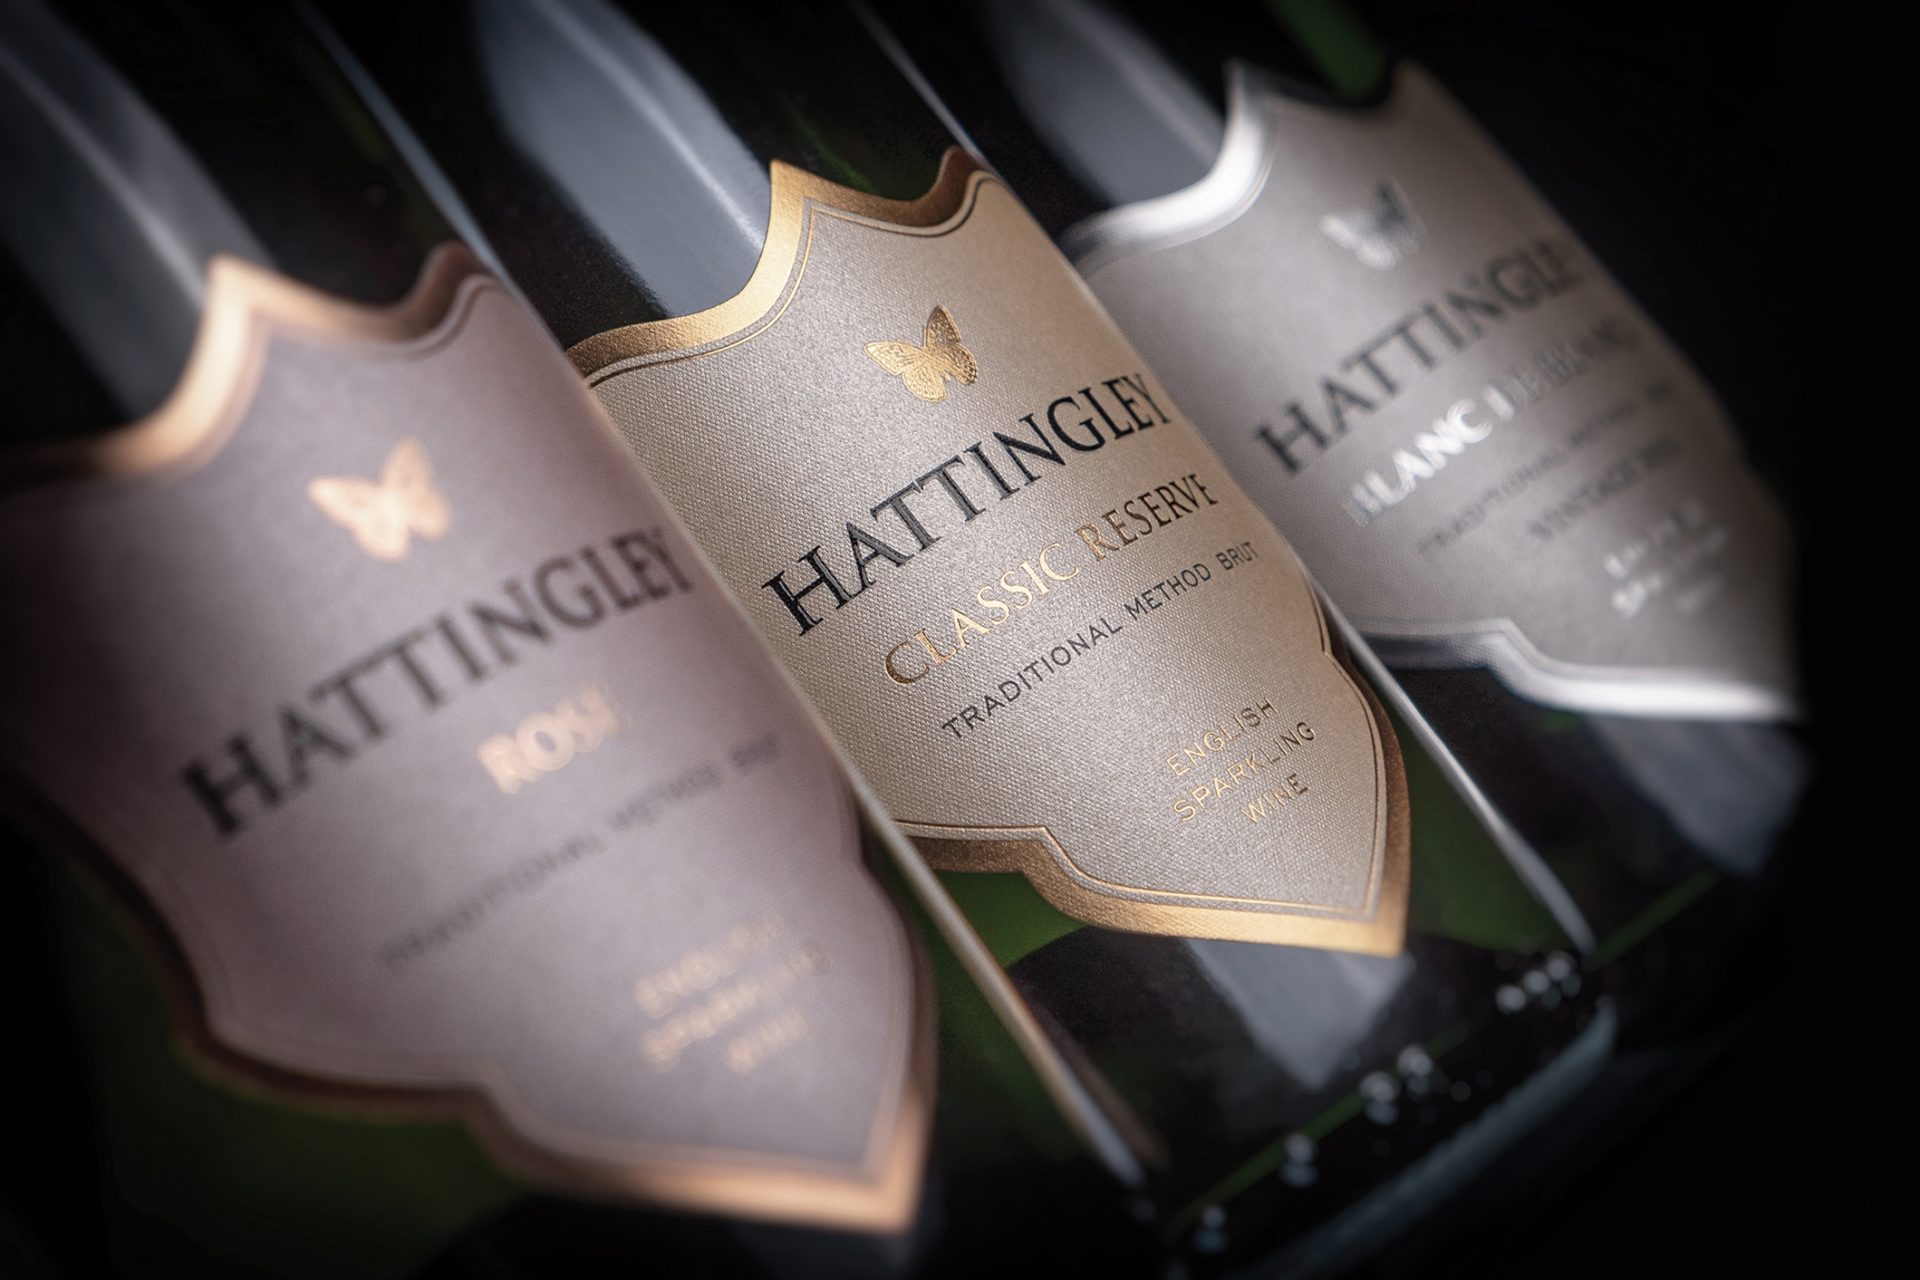 Three Hattingley Valley wine bottle labels